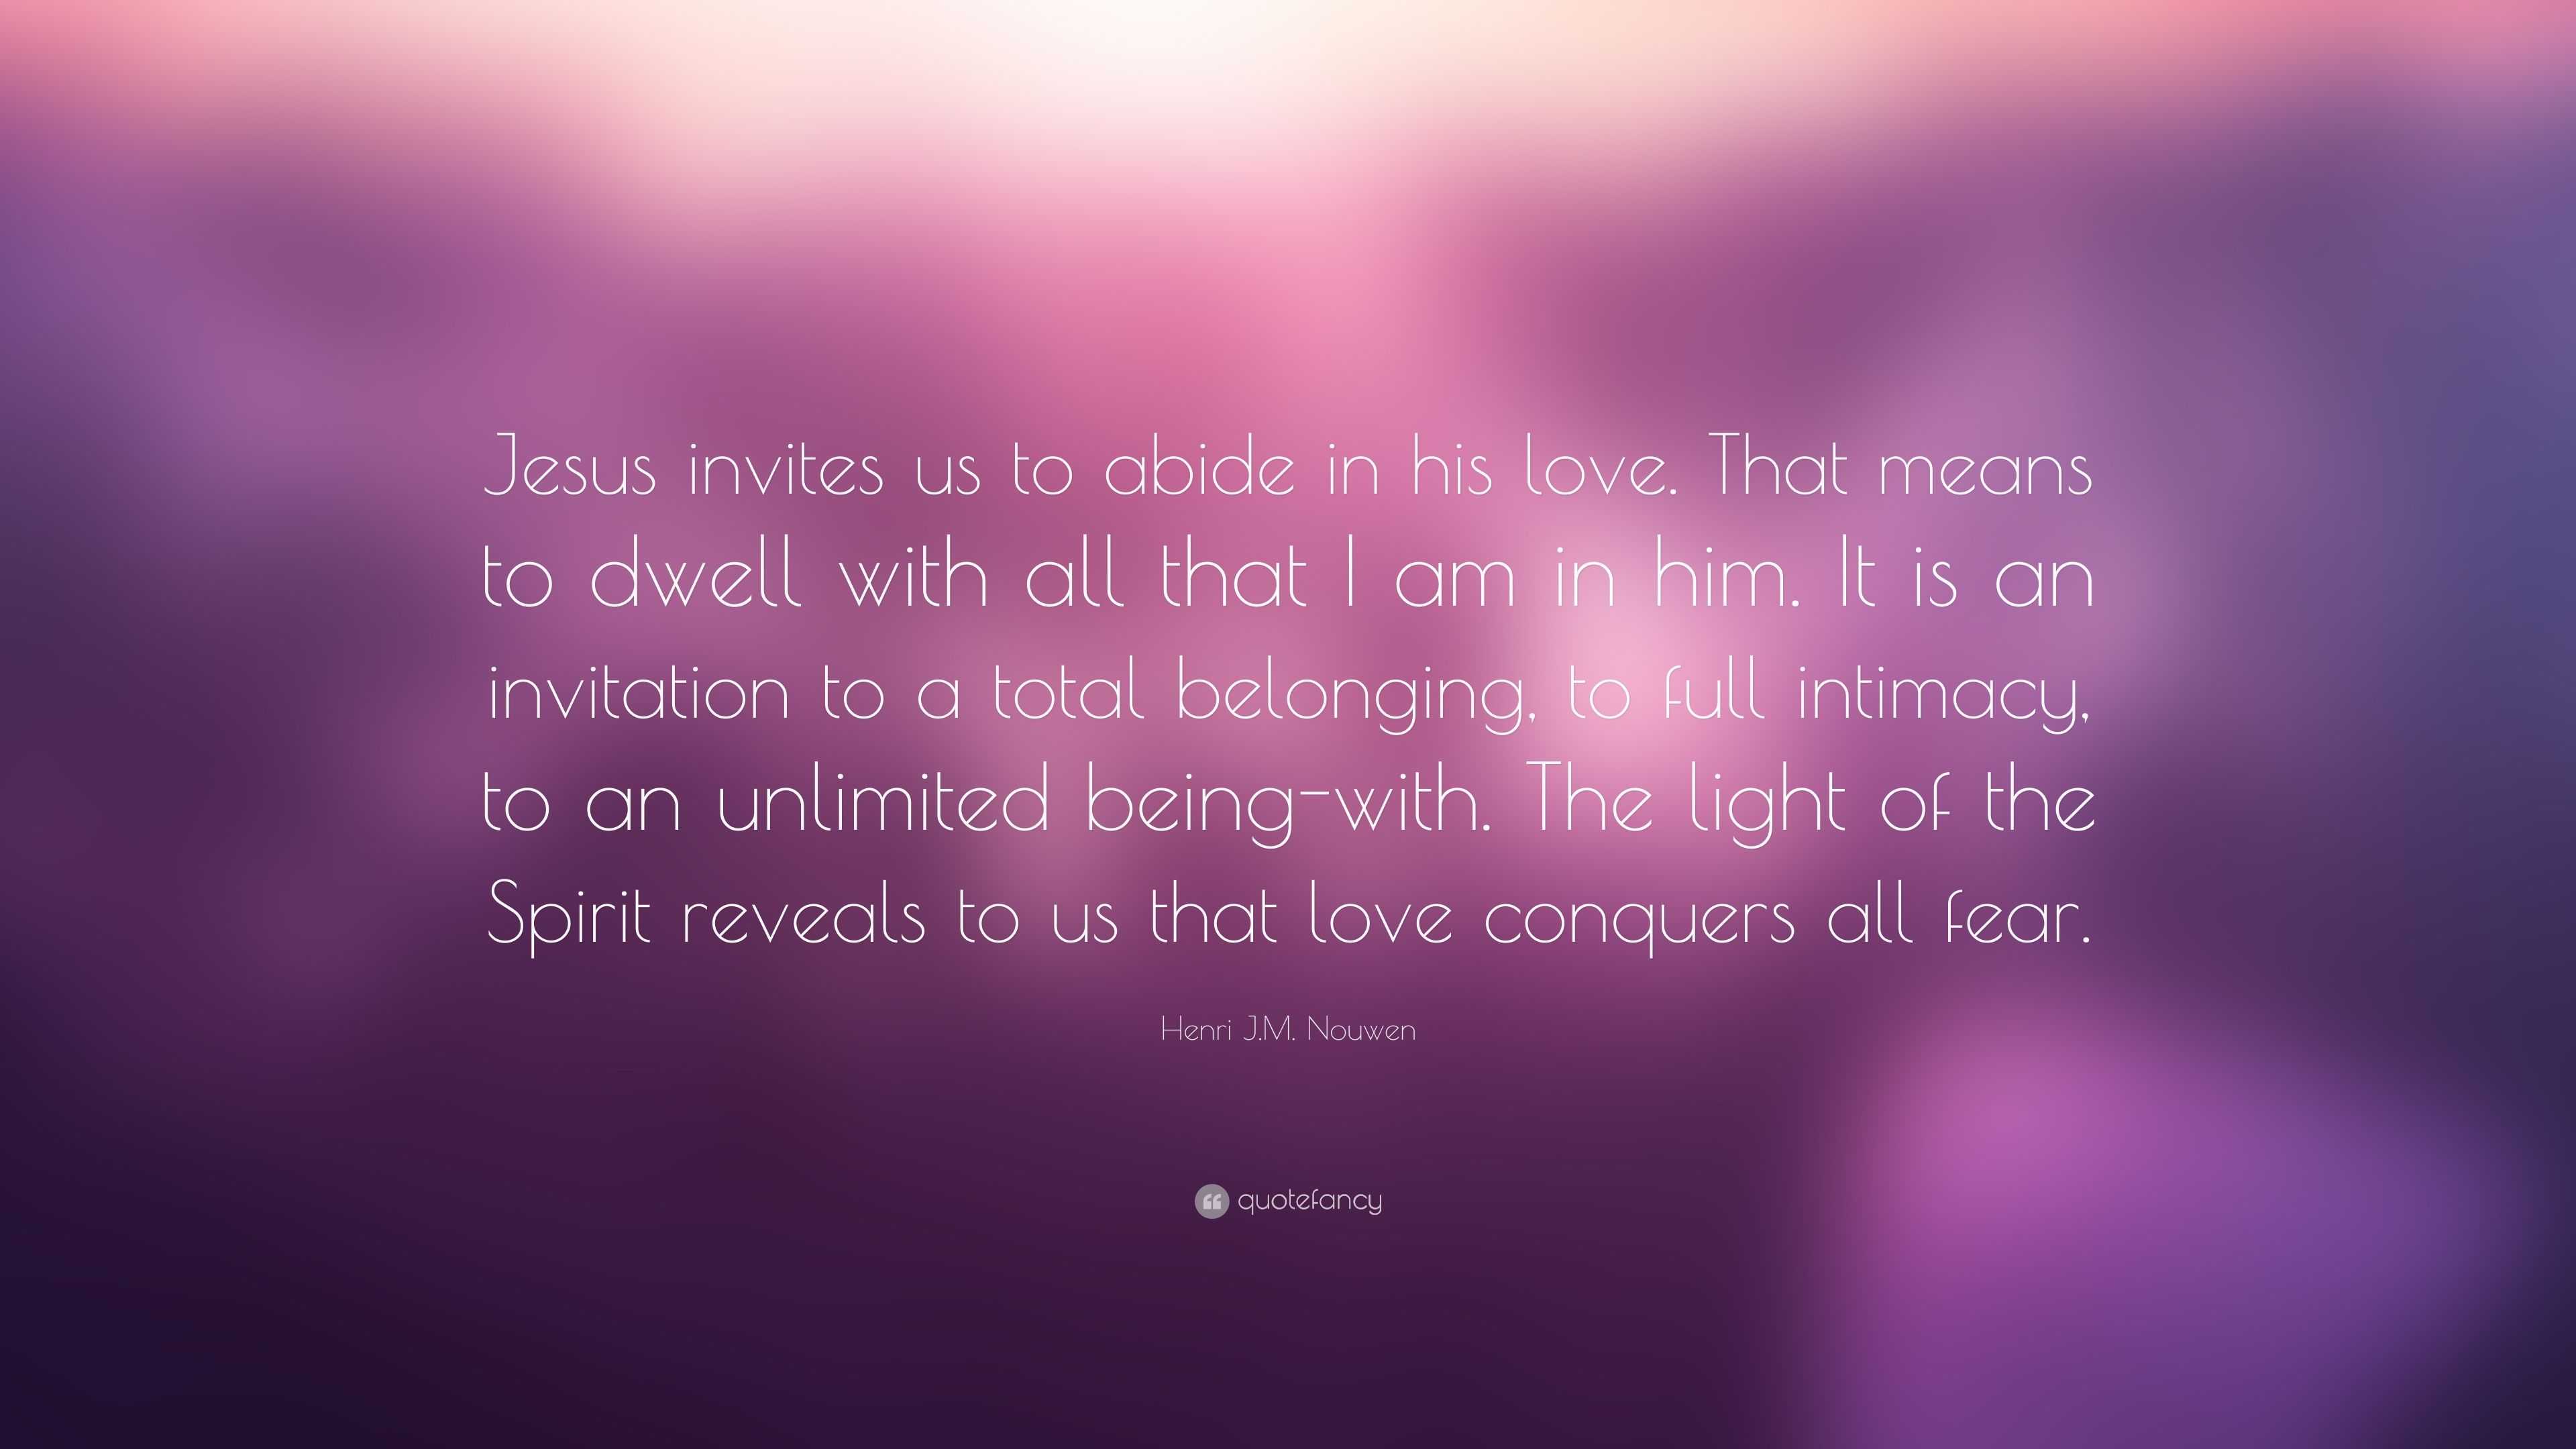 Henri J.M. Nouwen Quote: “Jesus invites us to abide in his love. That ...